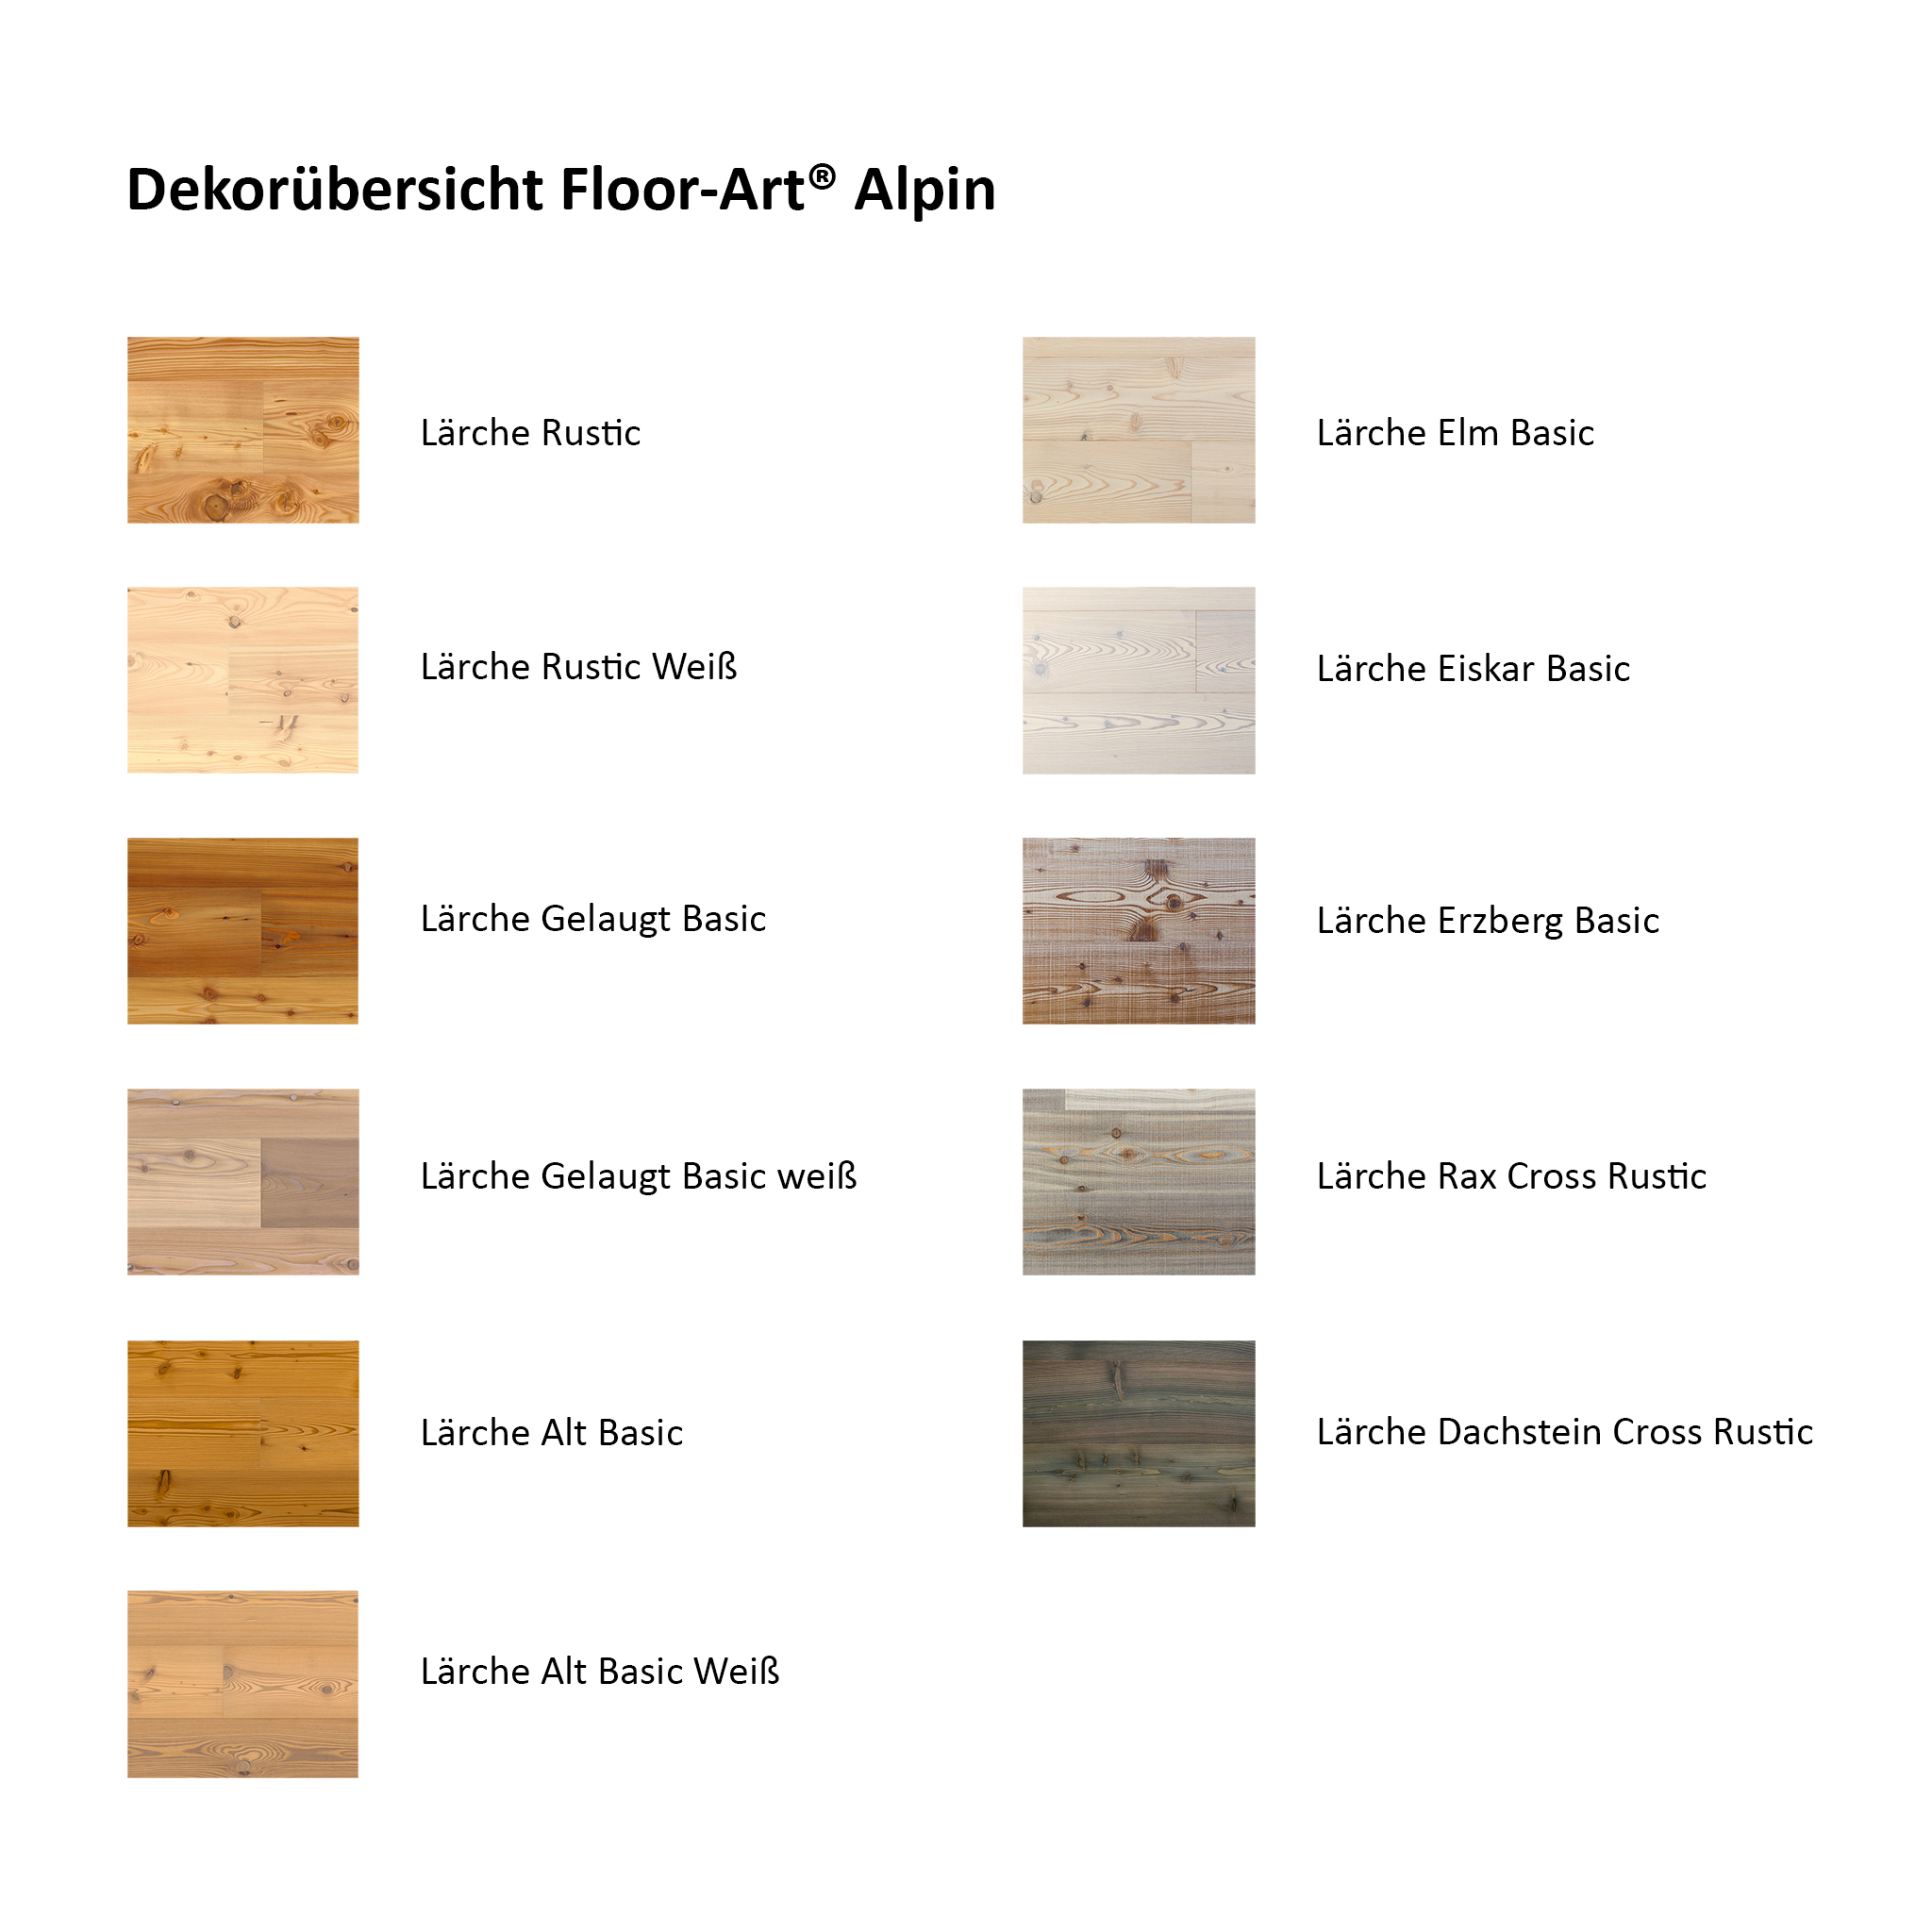 Floor-Art Alpin larch Elm Basic oil